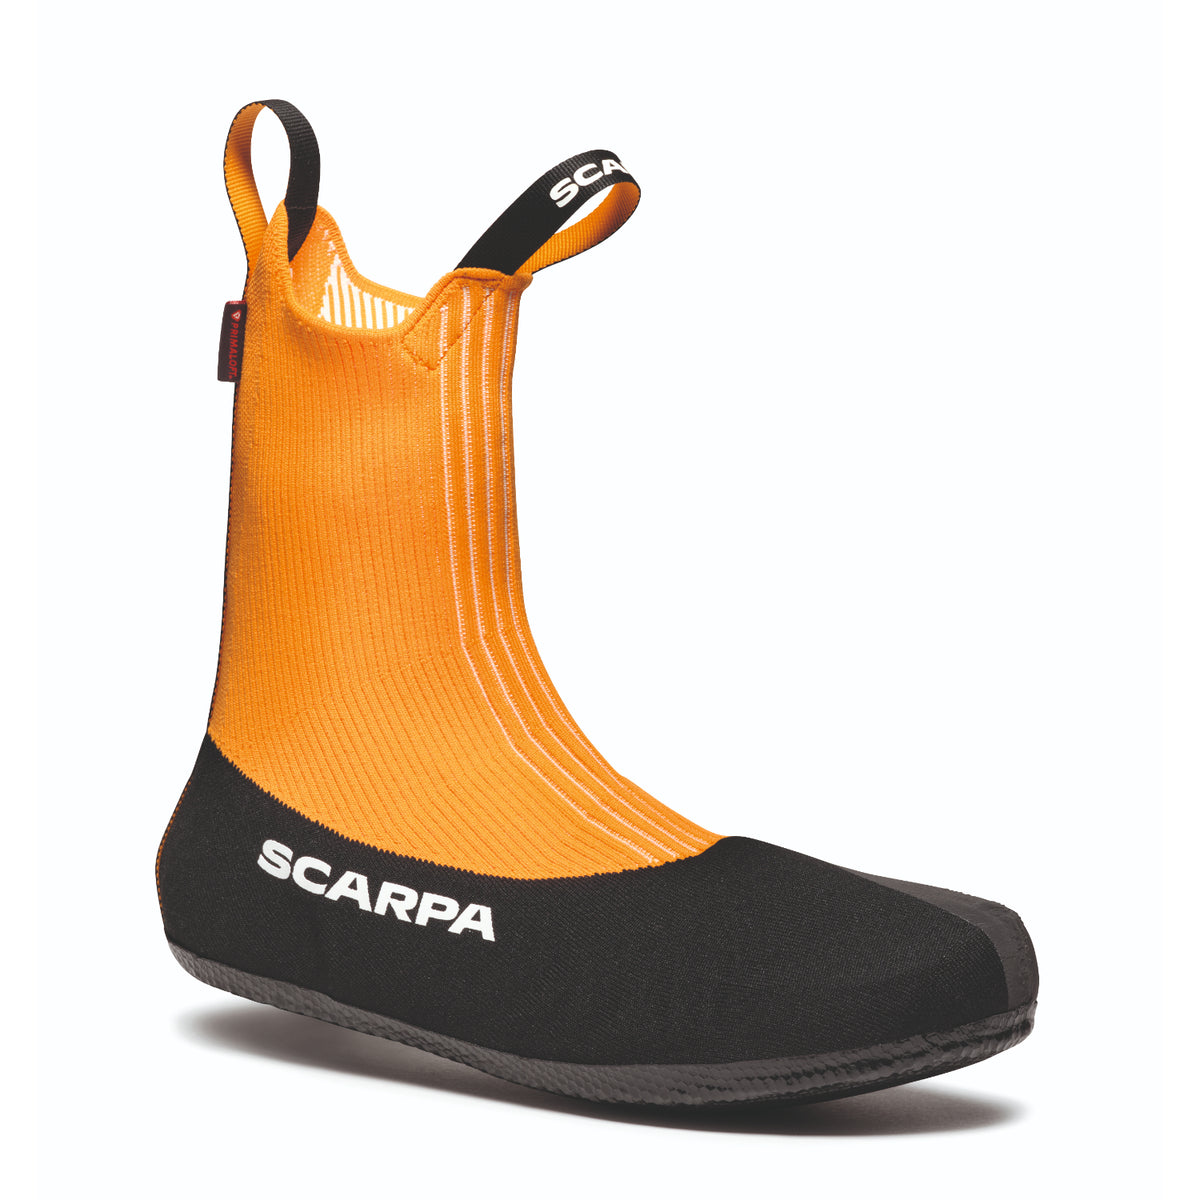 Scarpa Phantom 6000 HD mountaineering boot, inner booty